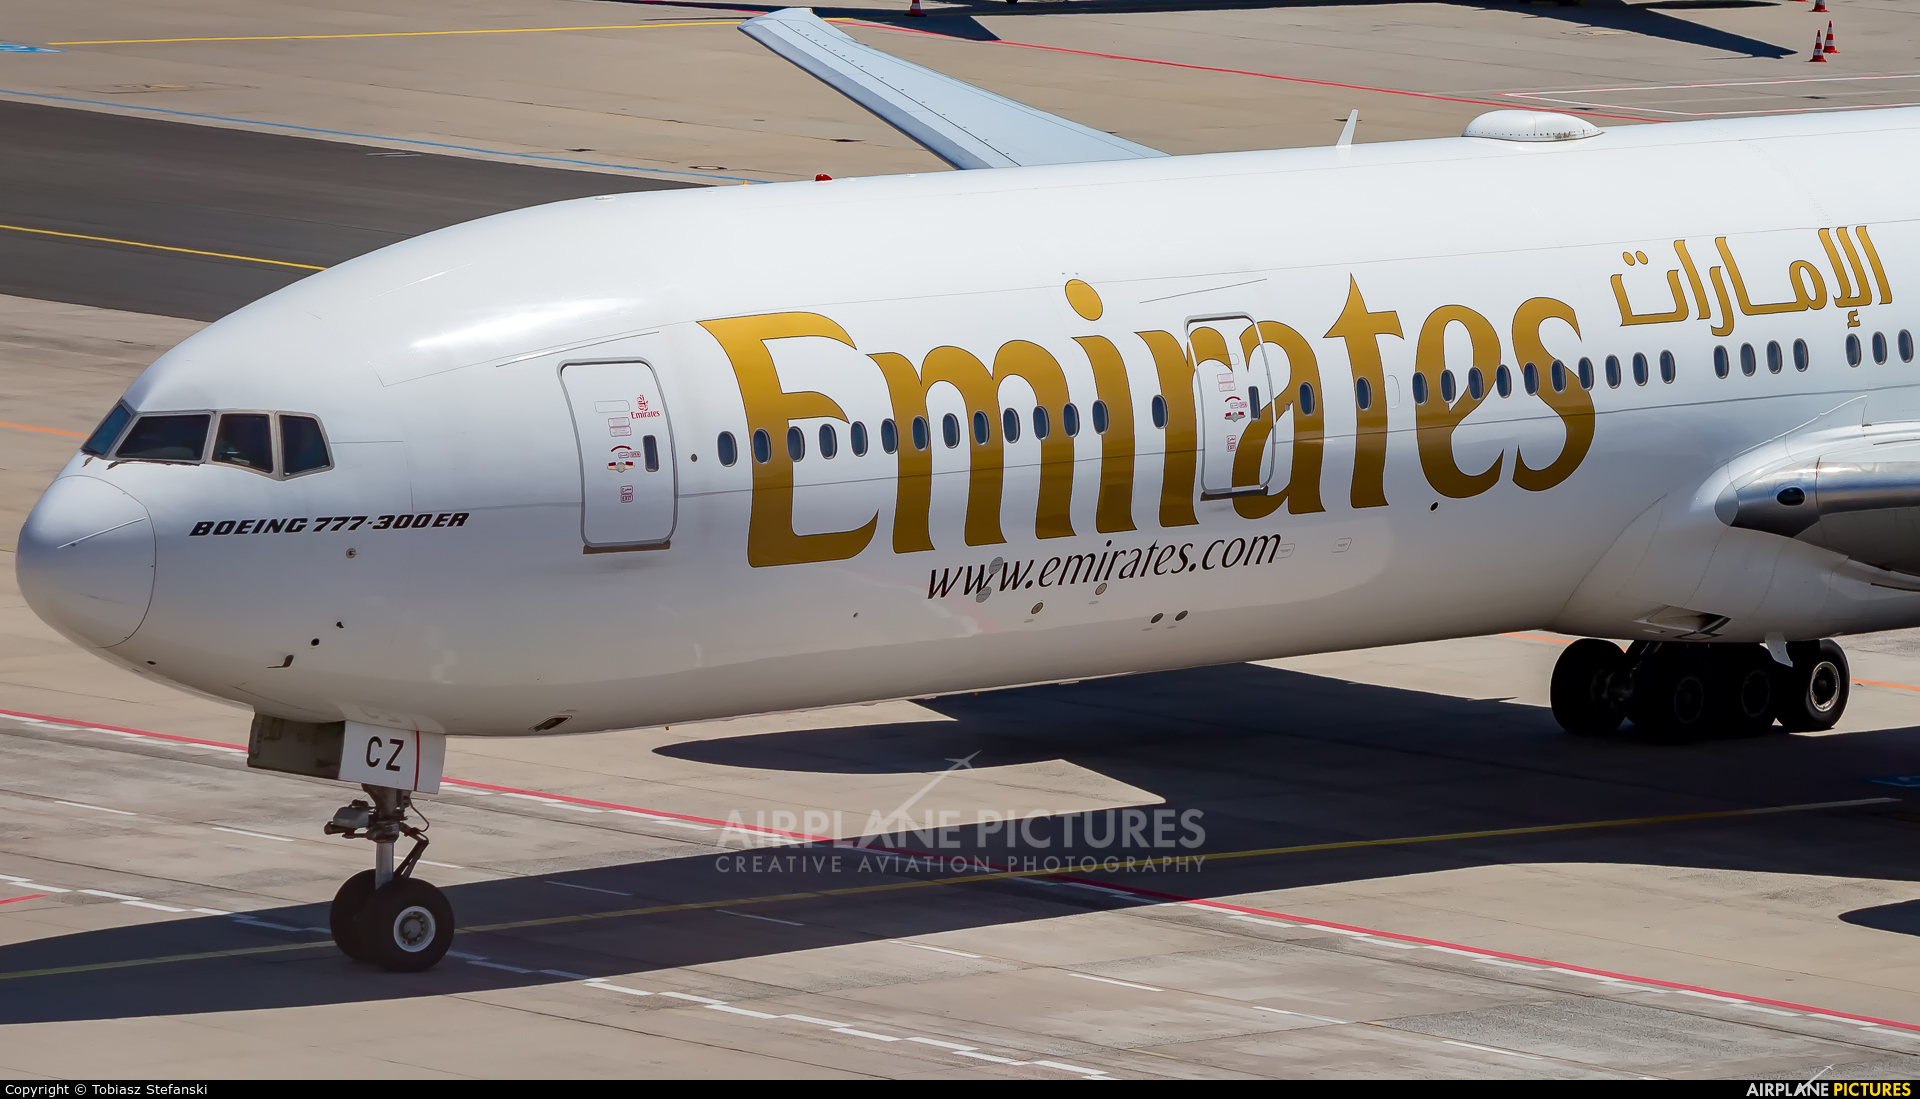 Emirates Airlines A6-ECZ aircraft at Frankfurt